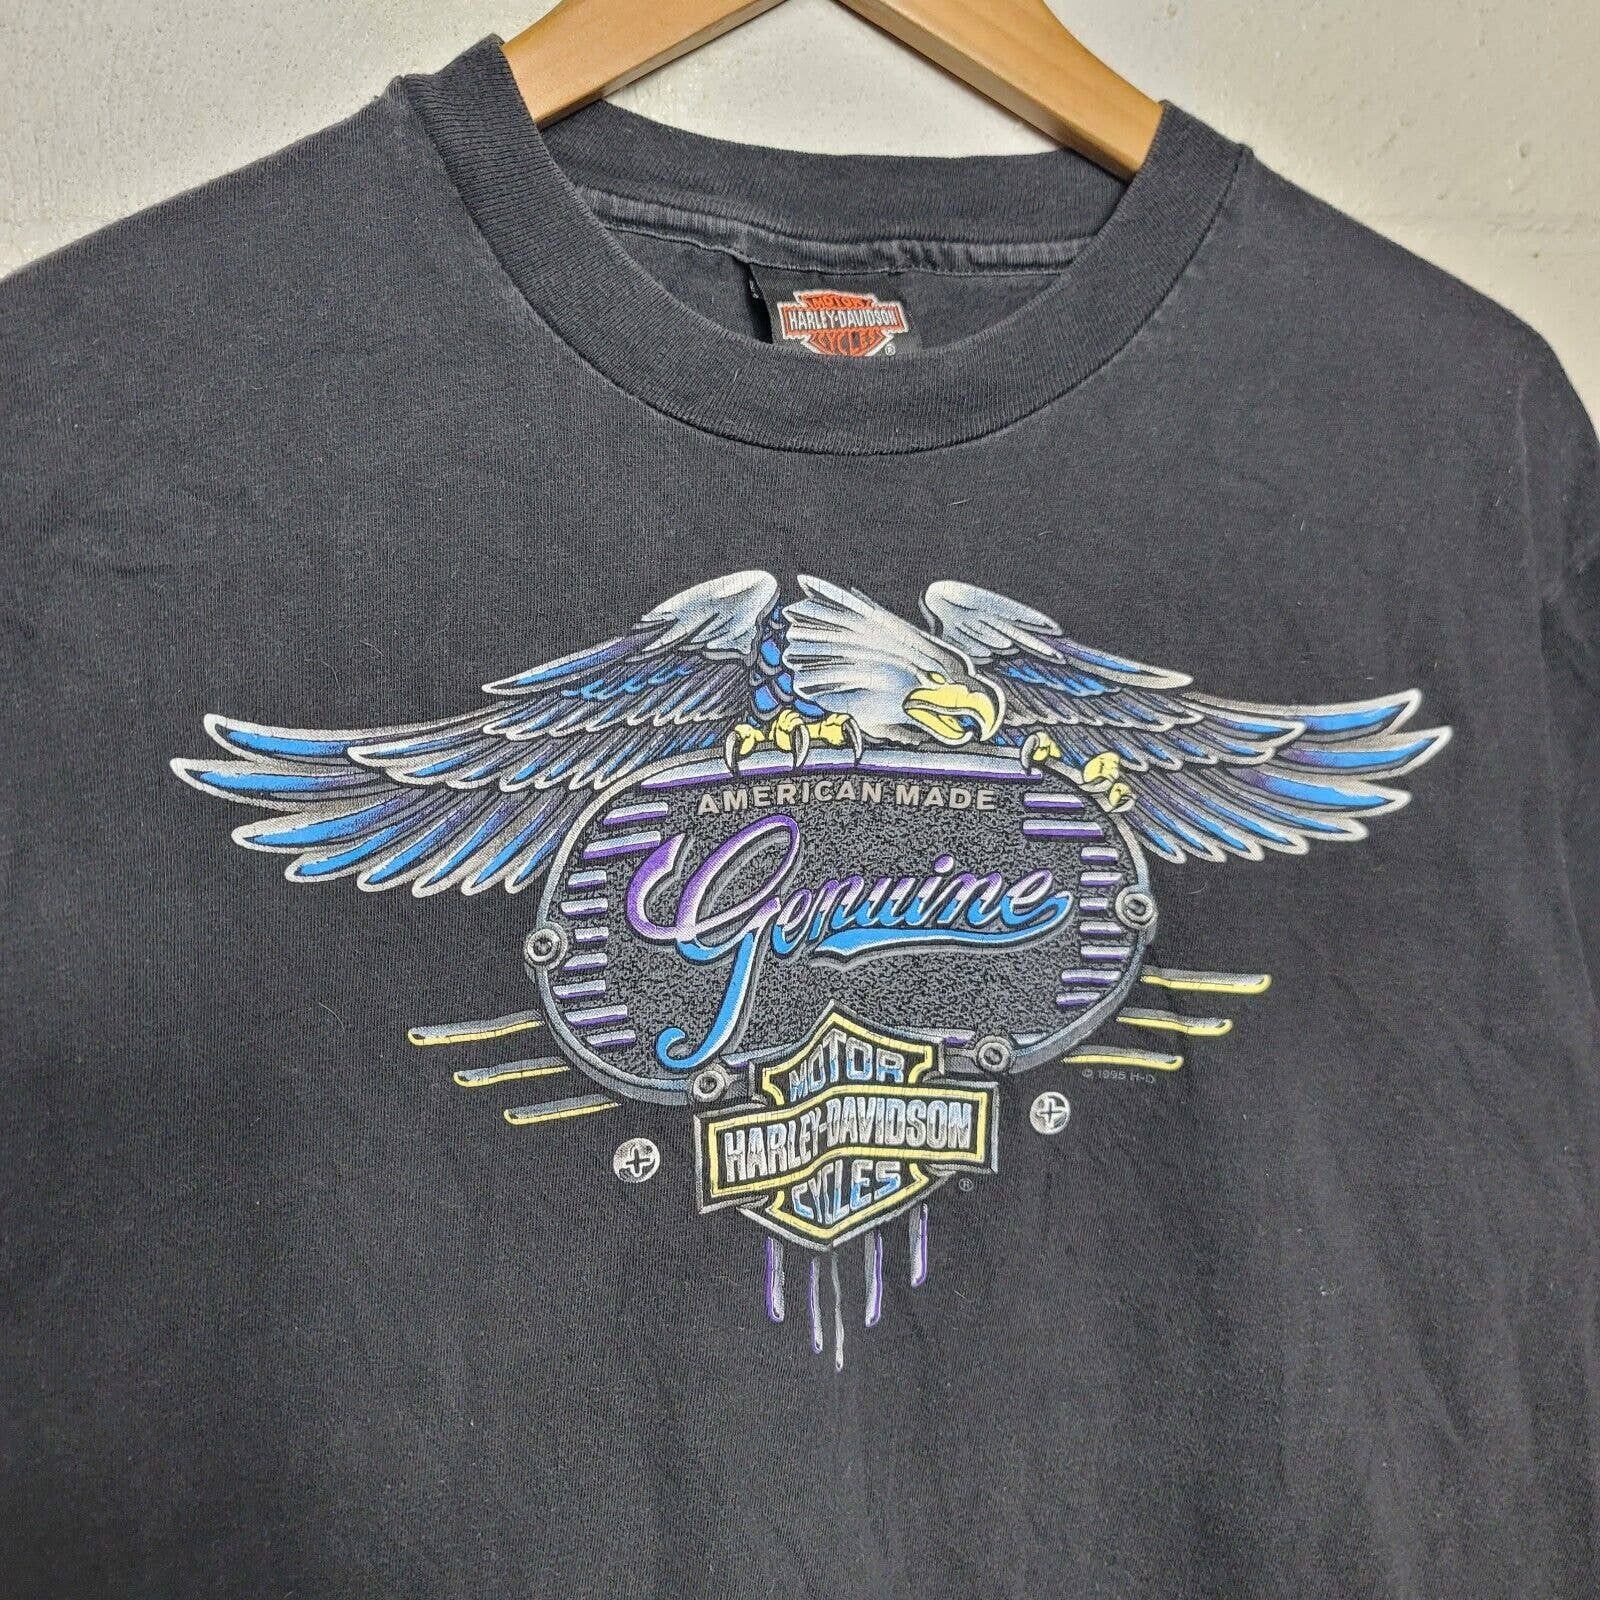 Vintage VTG 1995 Harley Davidson Eagle Barnett El Paso Texas T-Shirt Size US L / EU 52-54 / 3 - 4 Thumbnail